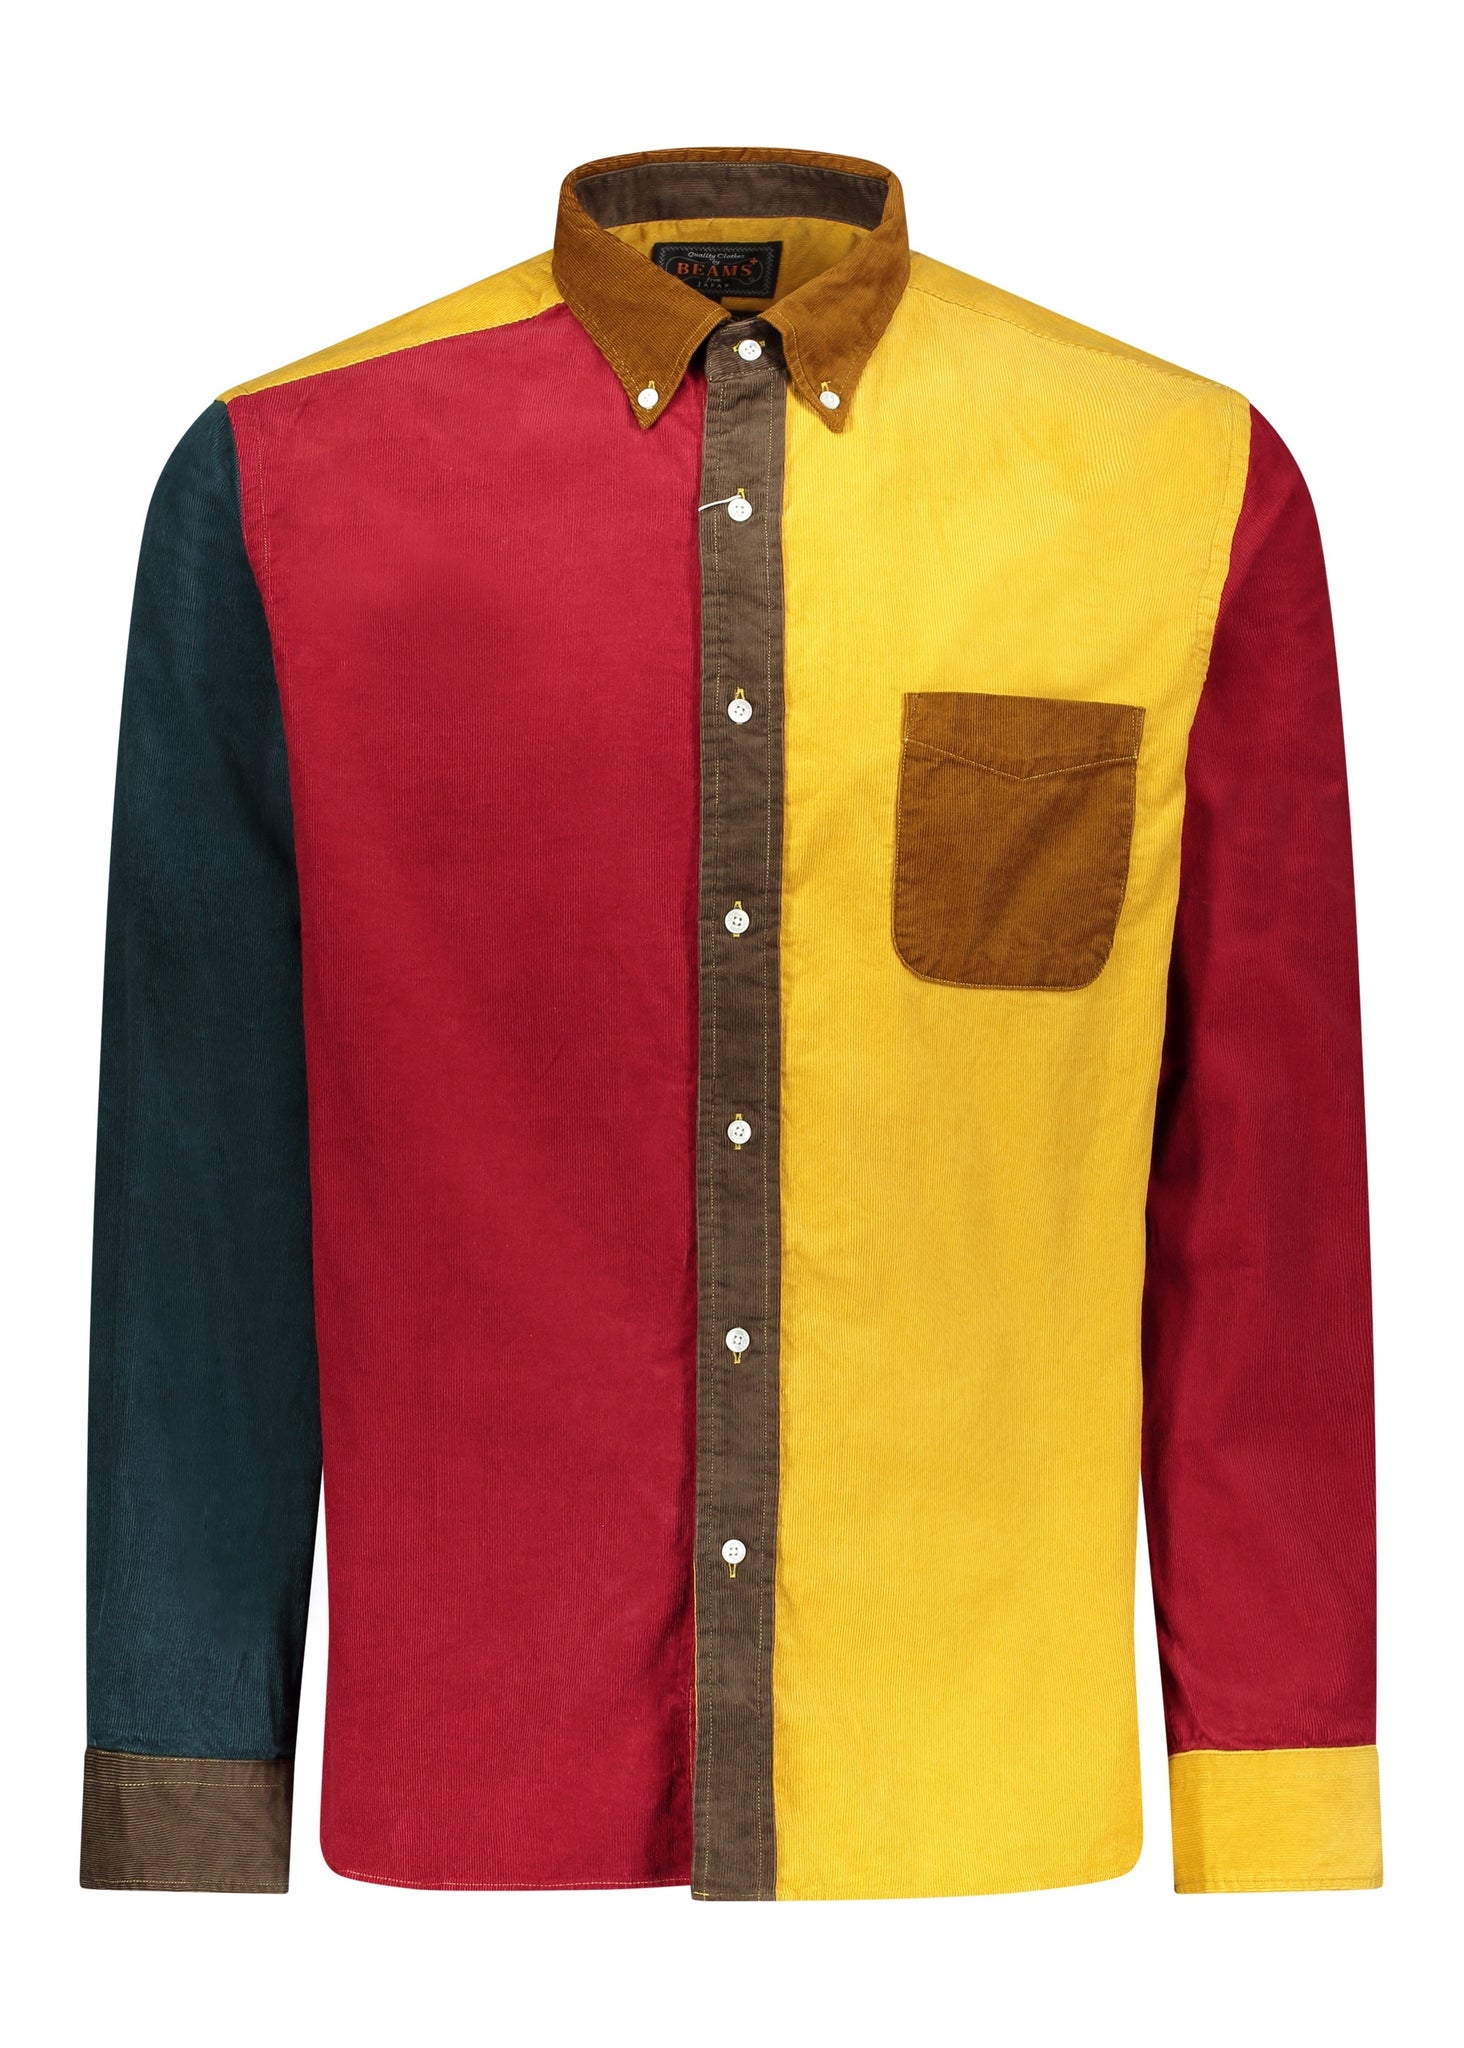 Beams Plus Golden Brown Corduroy Collar Shirt